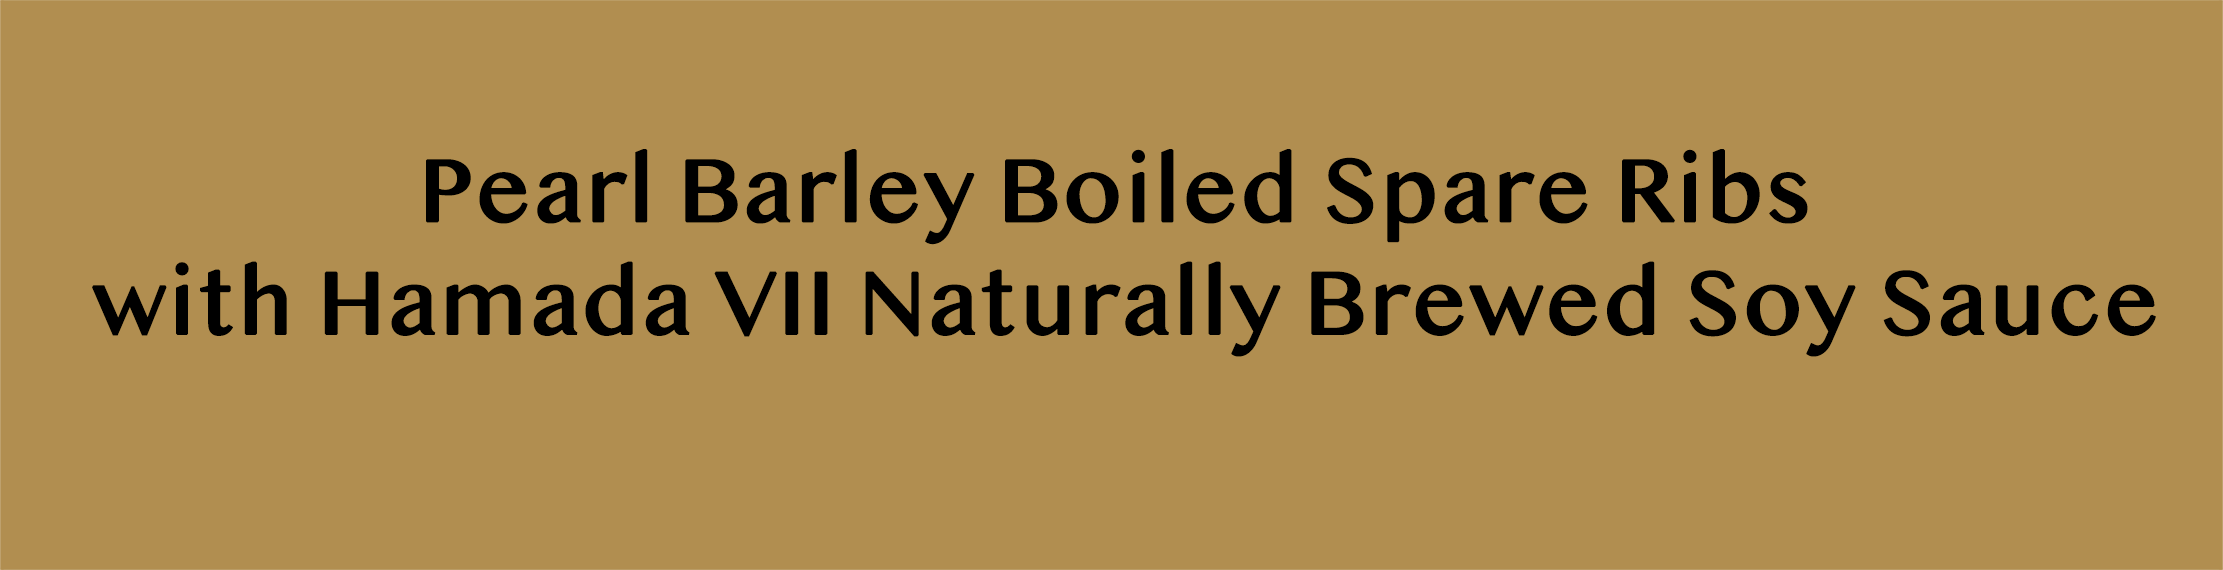 Pearl Barley Boiled Spare Ribs with Hamada VII Naturally Brewed Soy Sauce